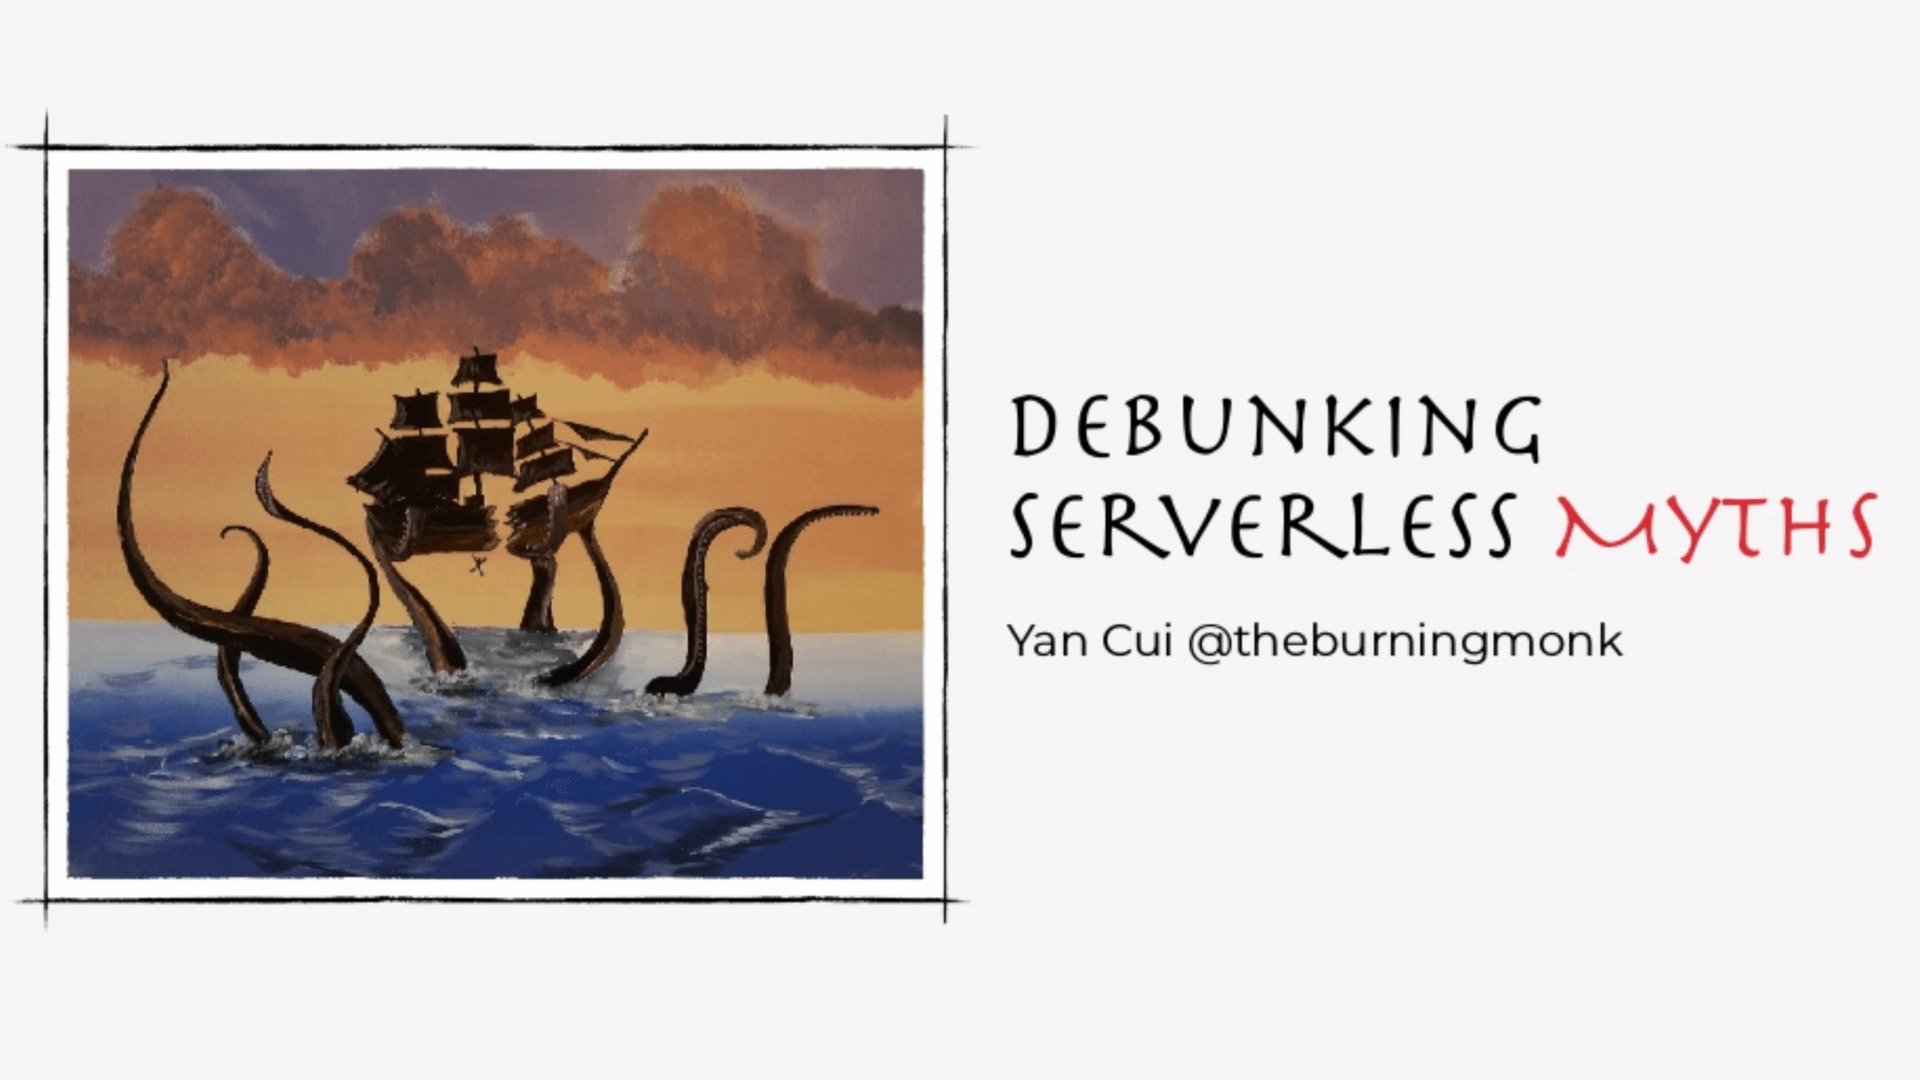 Yan Cui - ServerlessDays Hamburg